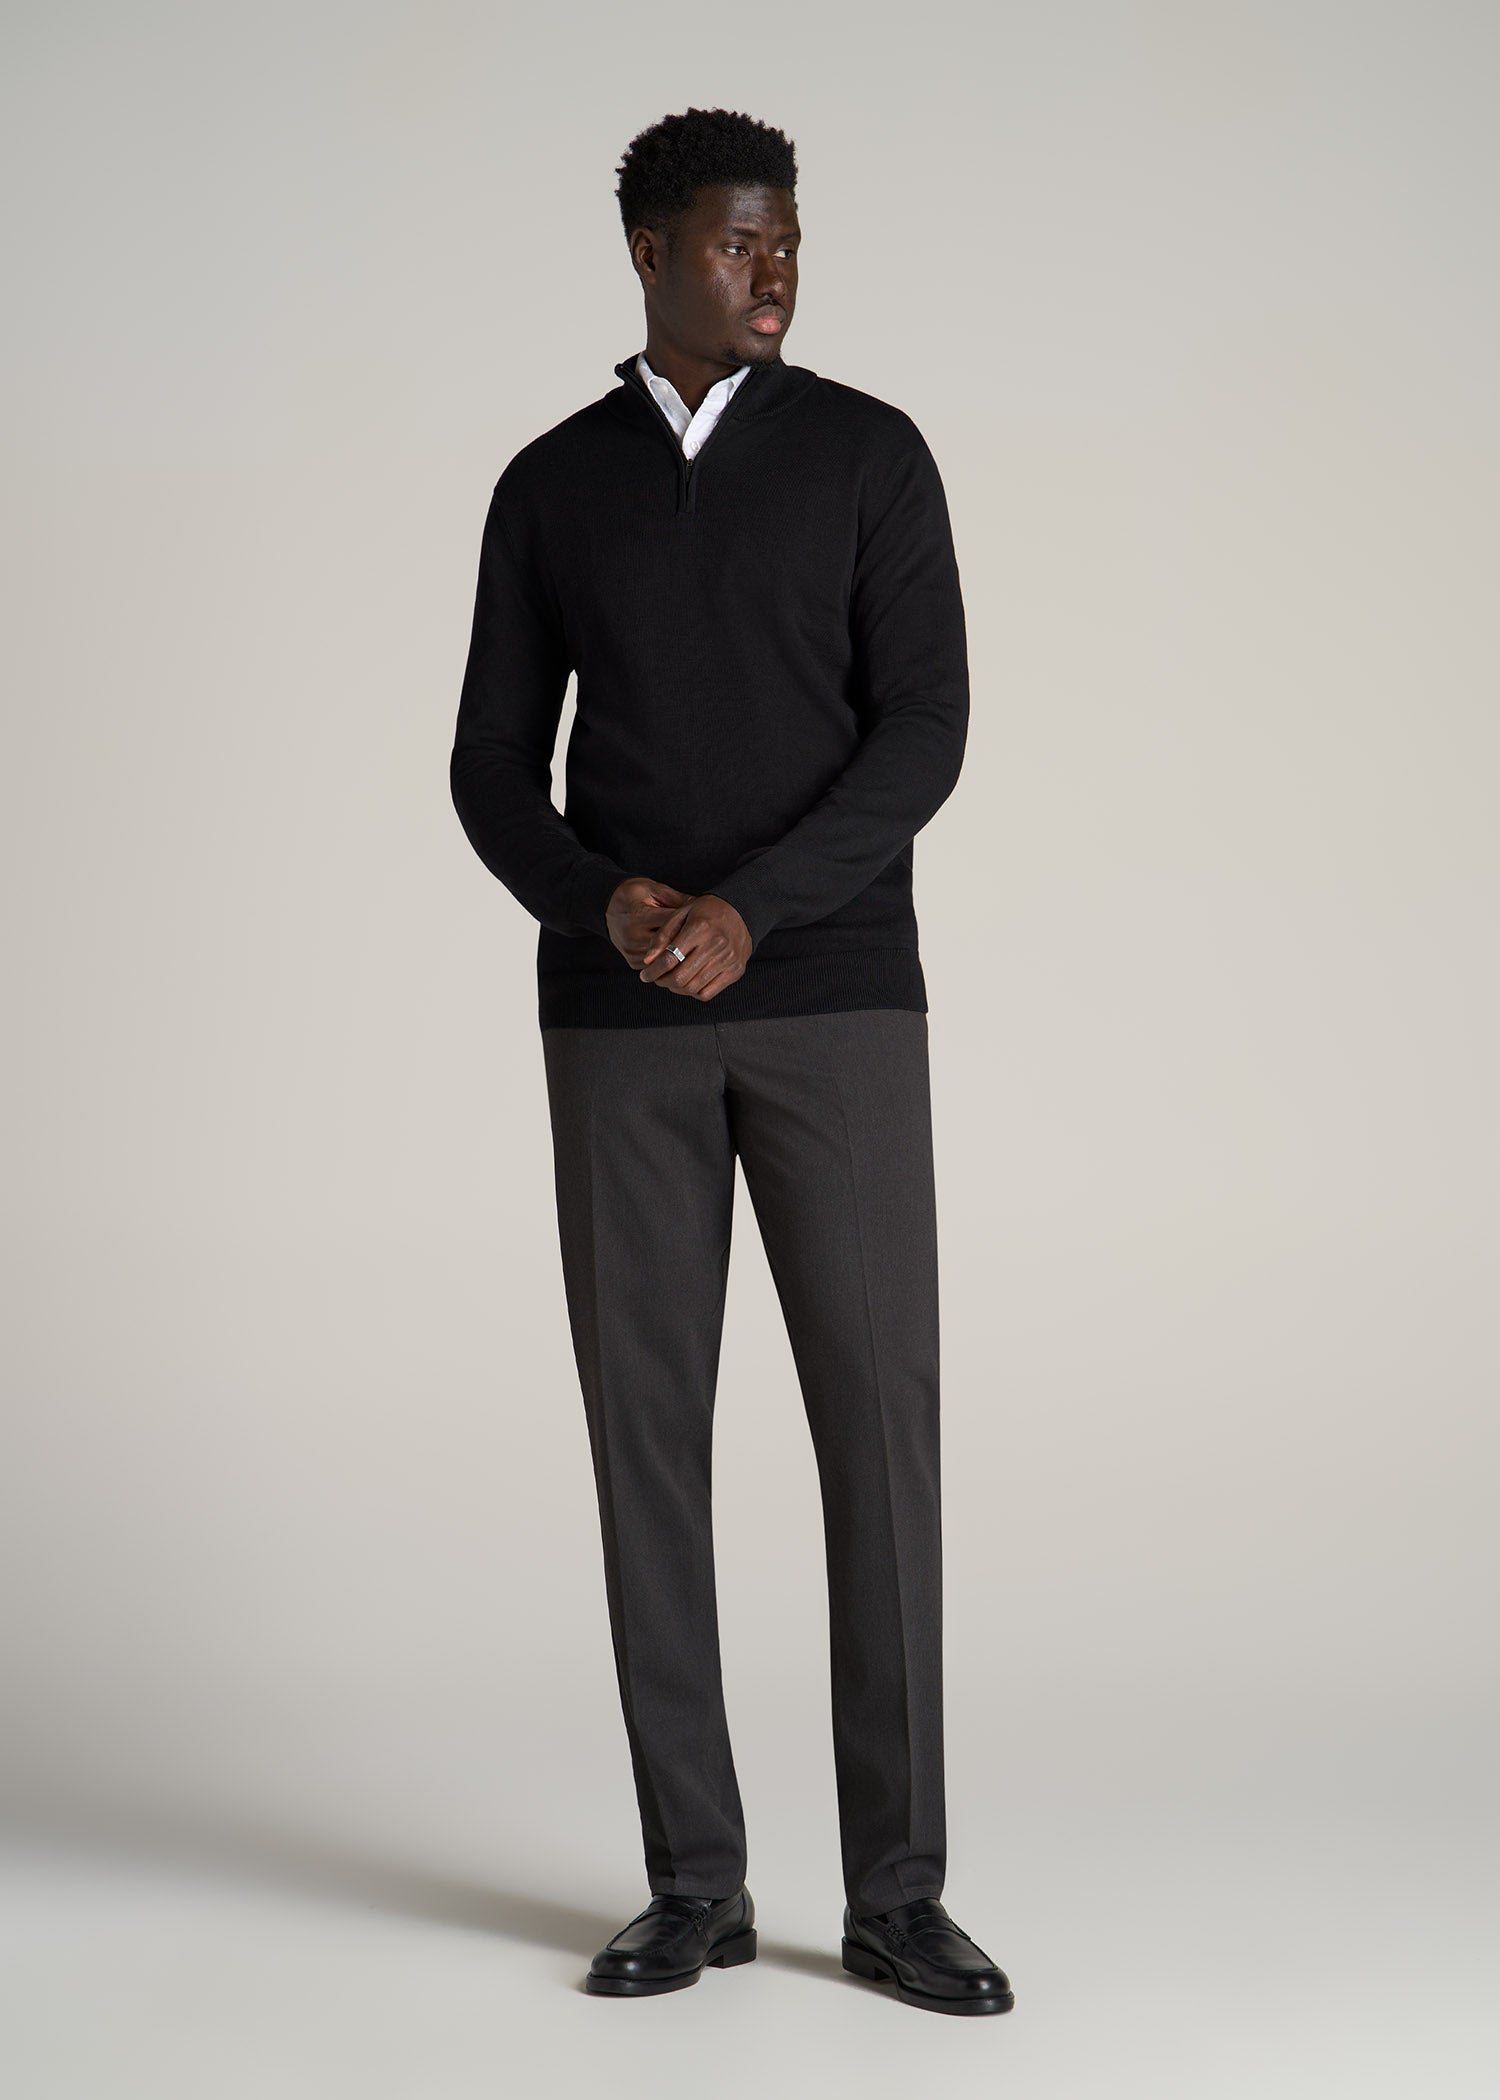 Perry Ellis Mens Slim Fit Polyester Formal Dress Pants Trousers BHFO 9344 |  eBay